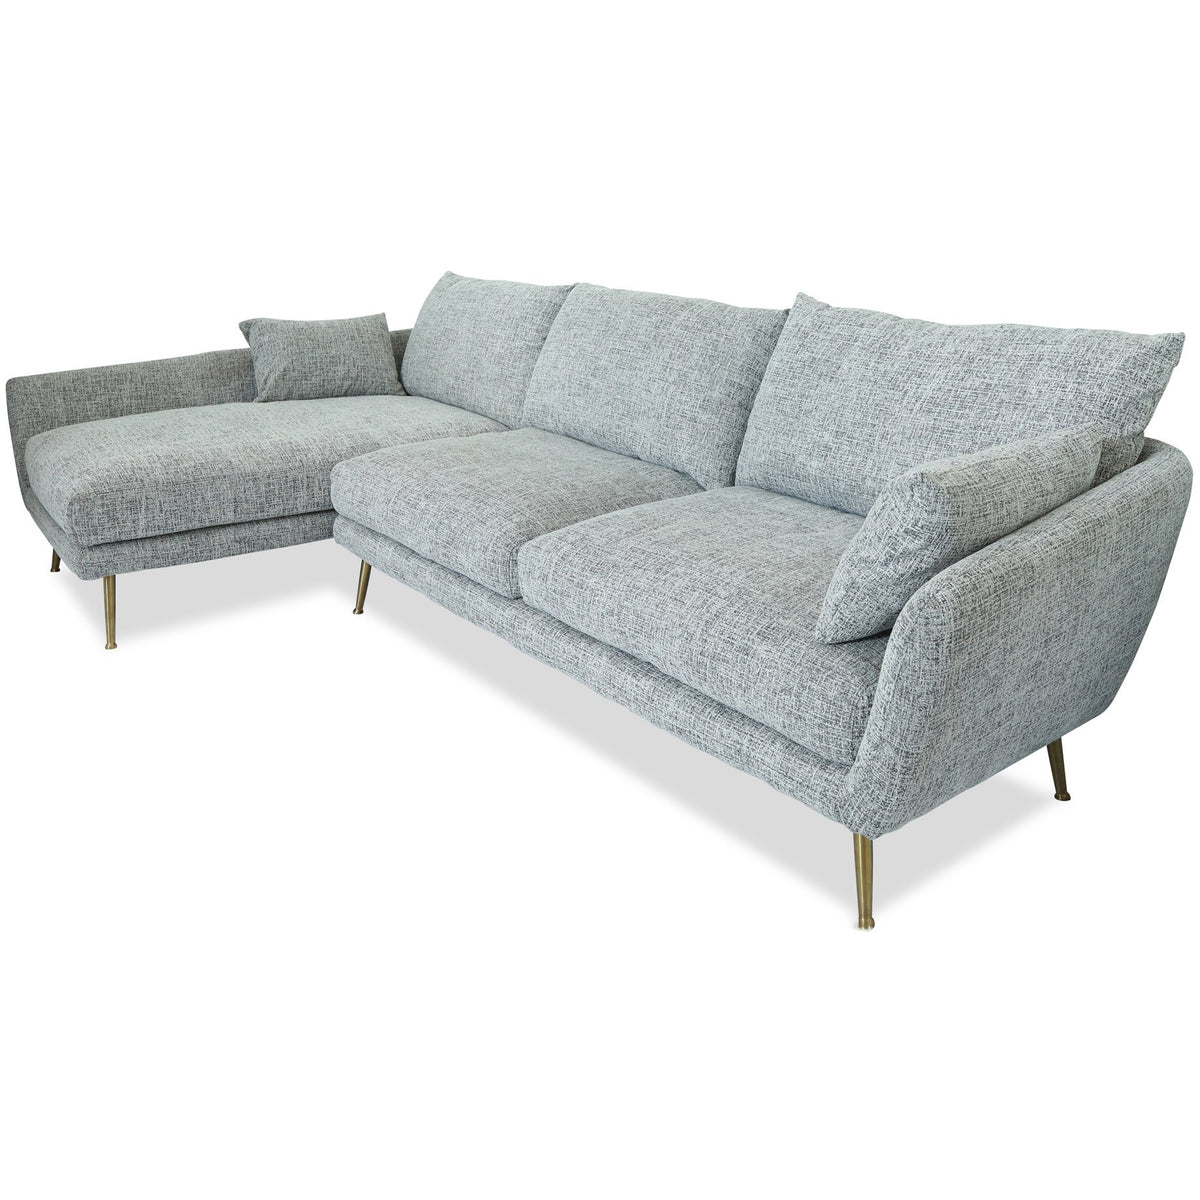 Edloe Finch Harlow Sectional Sofa, Left Facing